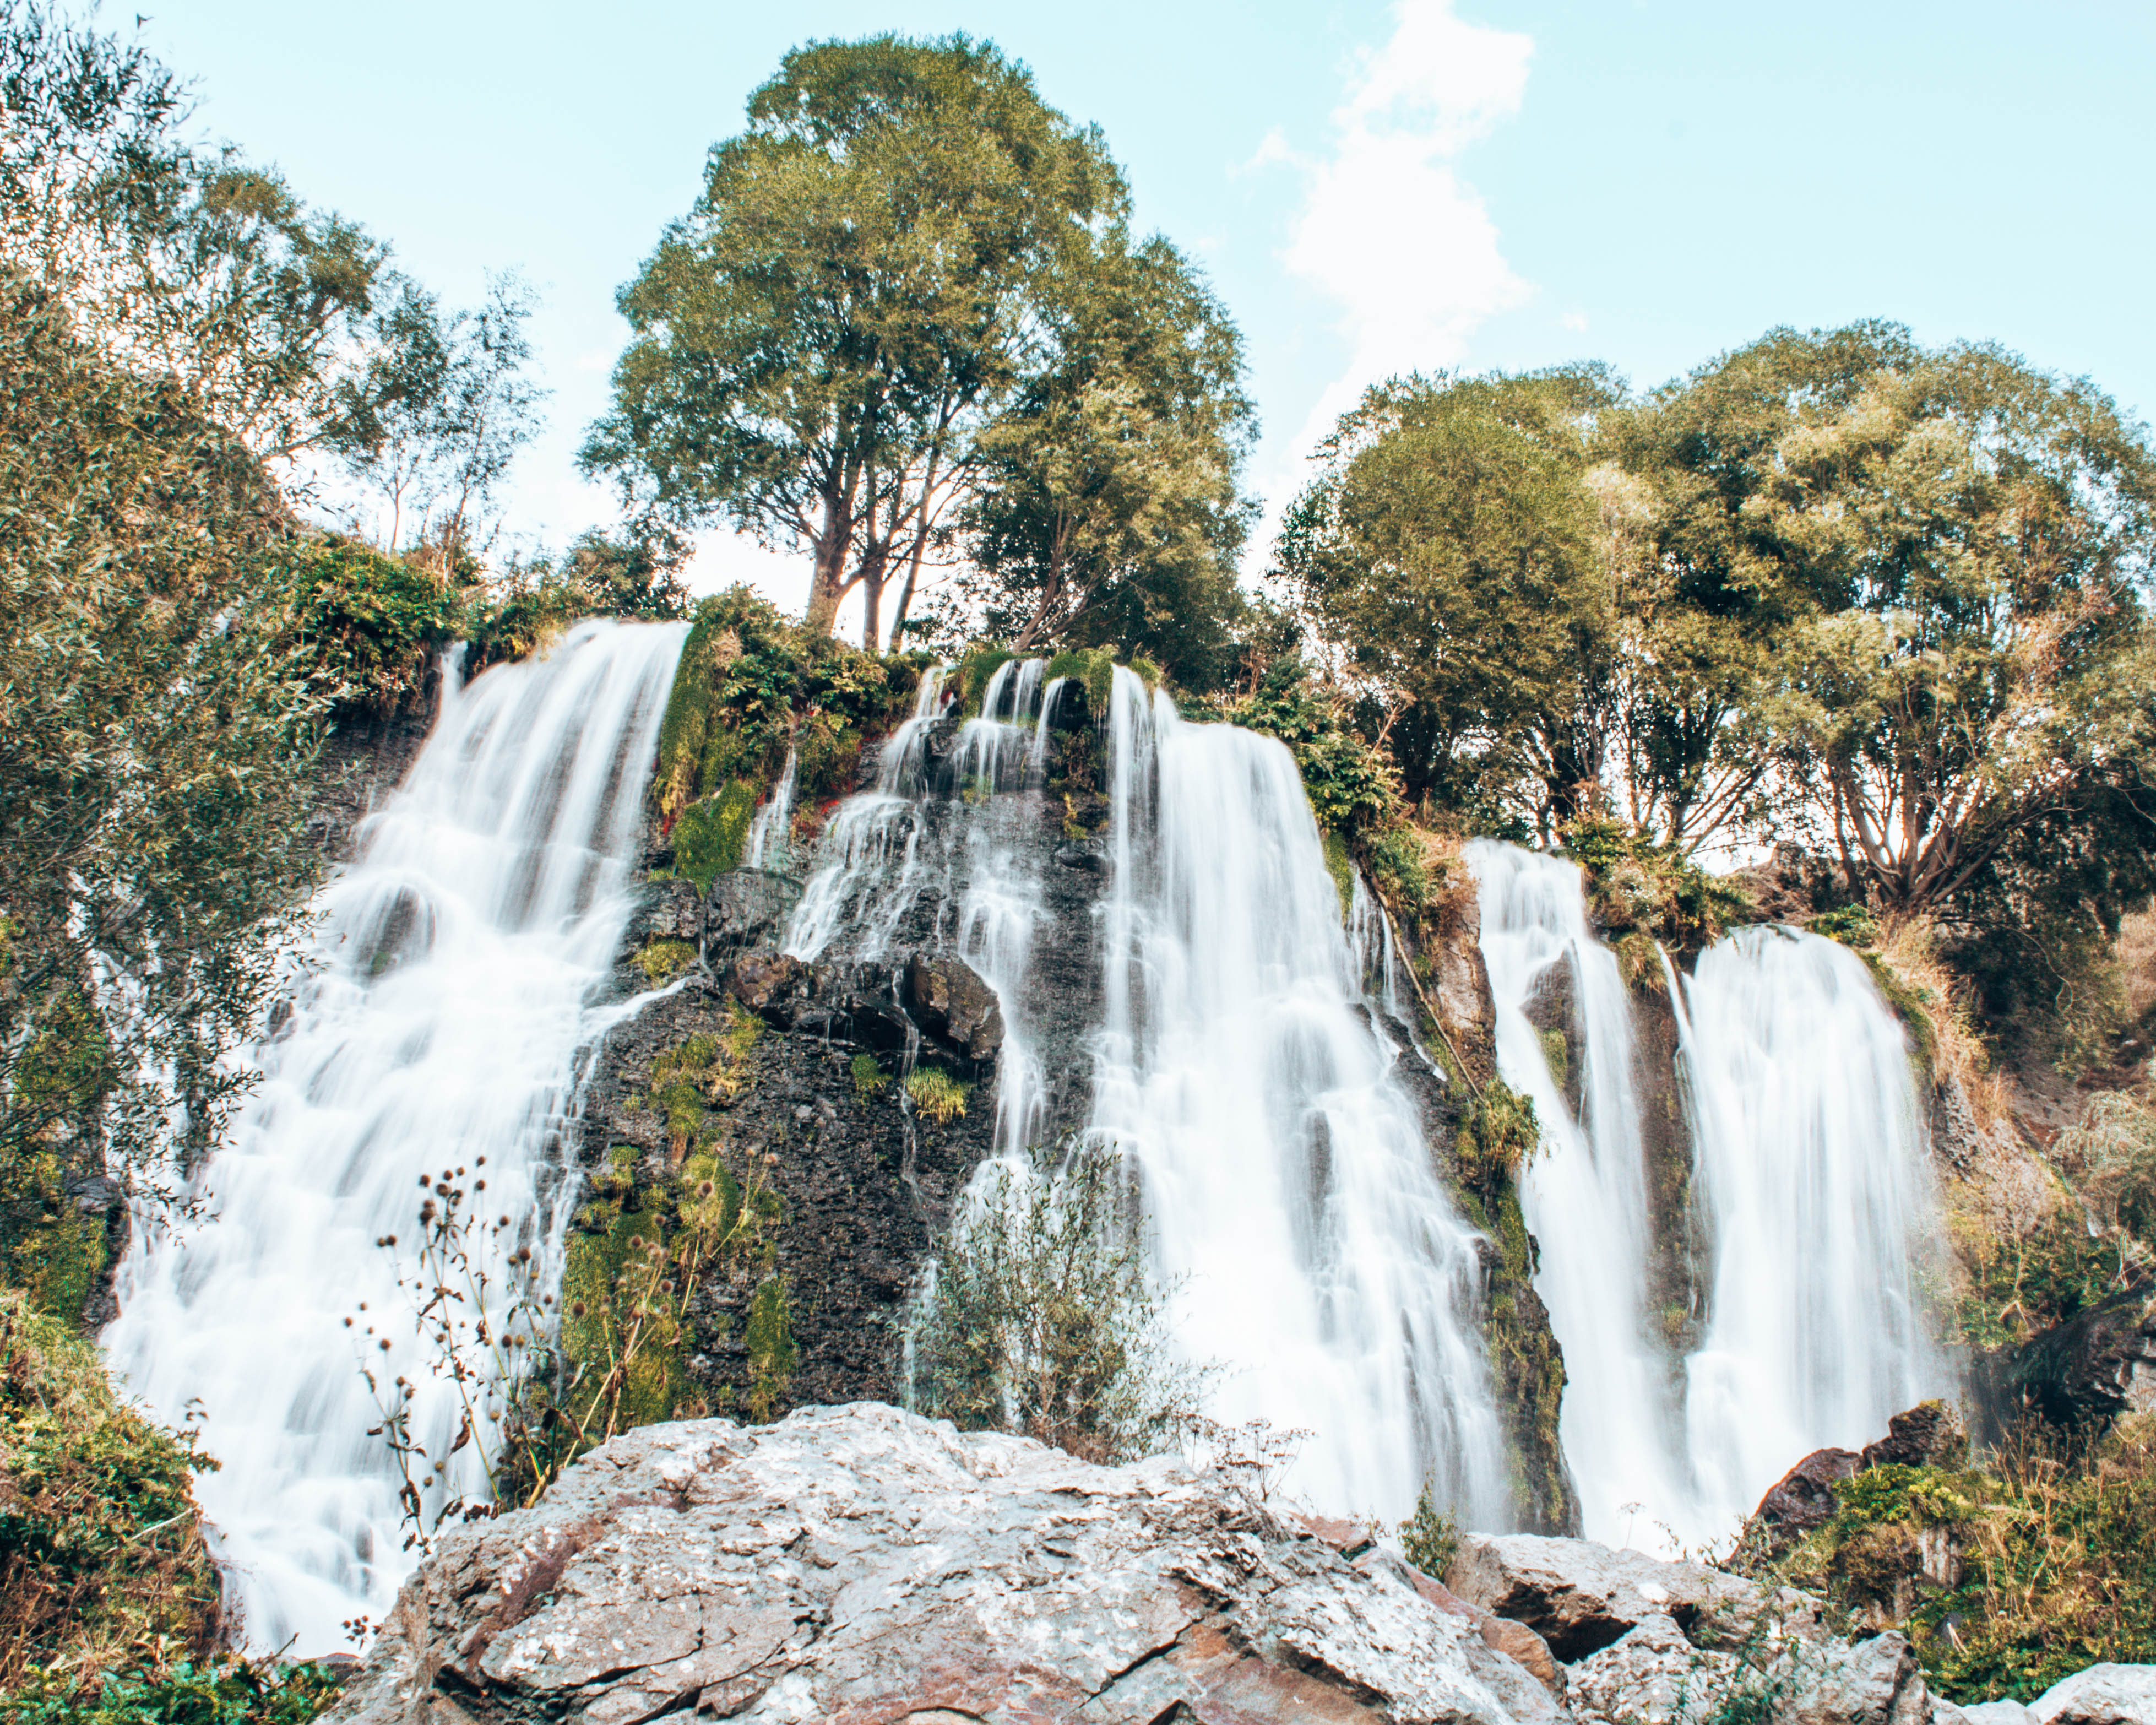 Shaki waterfall Armenia. 15 things in Armenia that are not churches - WeDidItOurWay.com